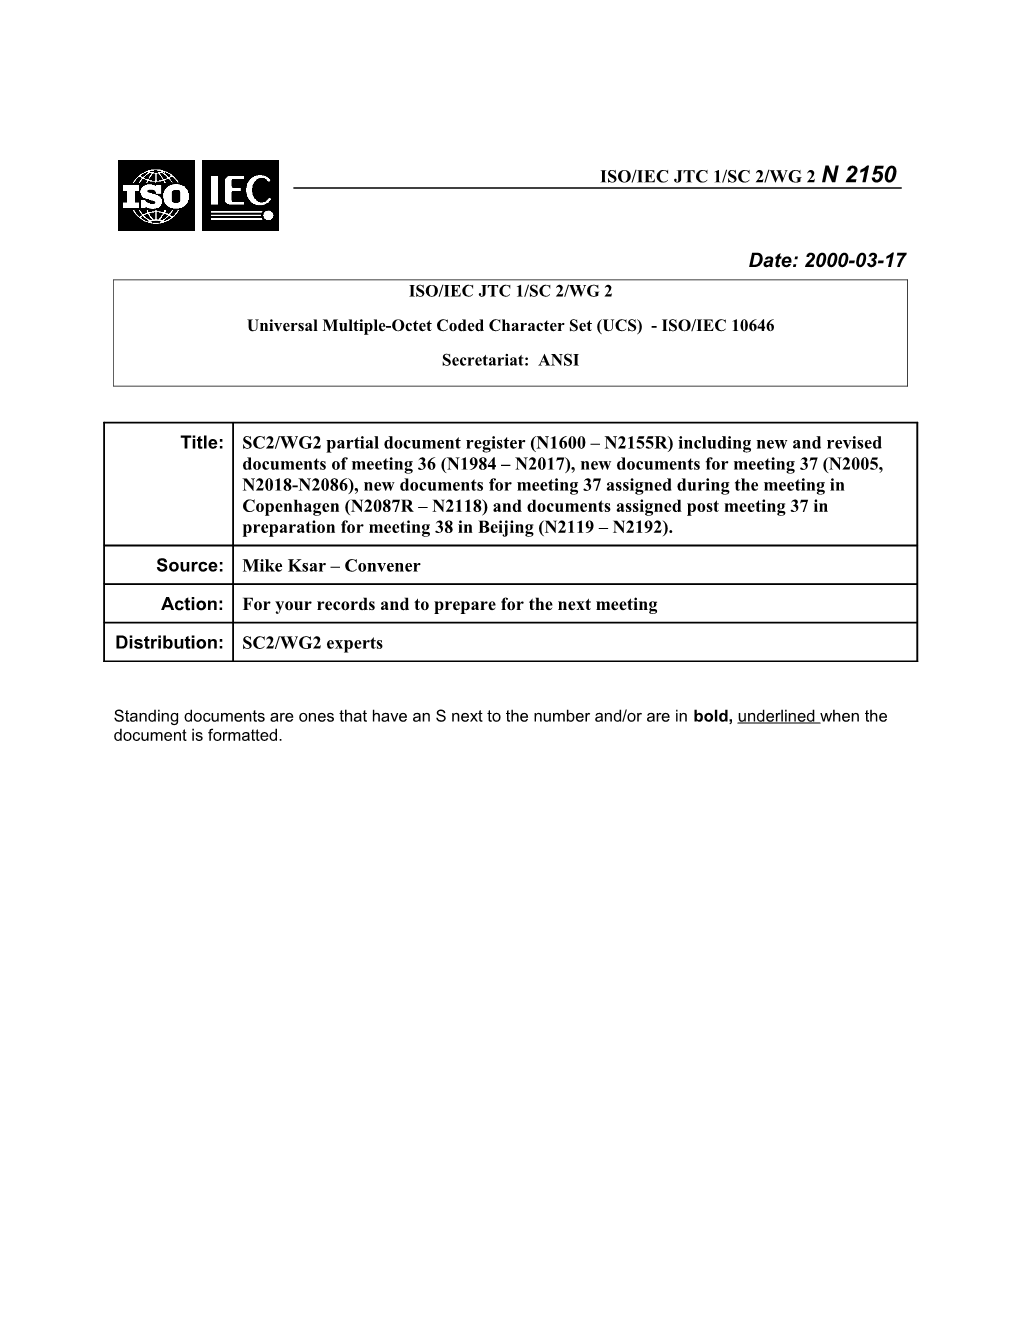 SC2/WG2 Partial Document Register